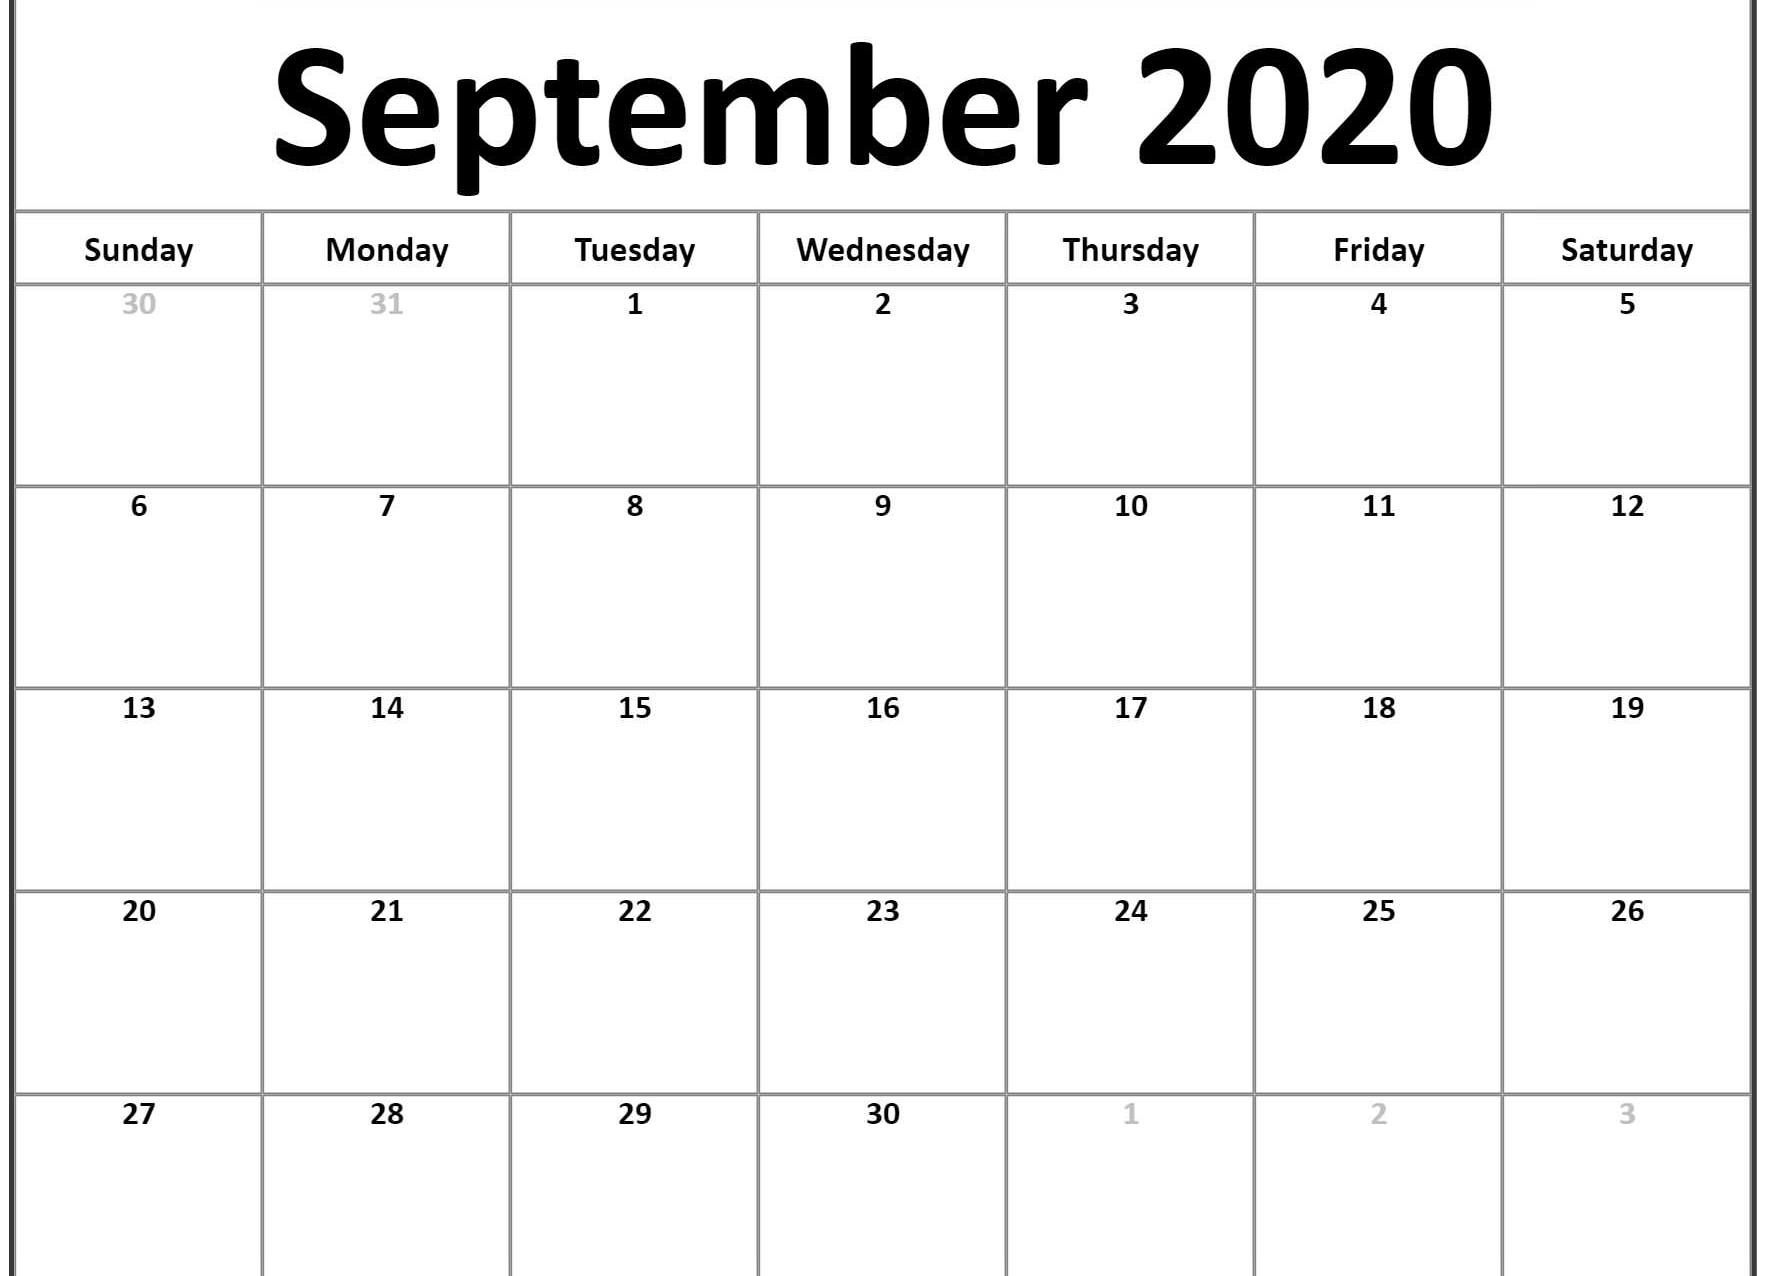 September 2020 Calendar Template | Printable Calendar Calendar From September 2020 To December With Jewish Holidays